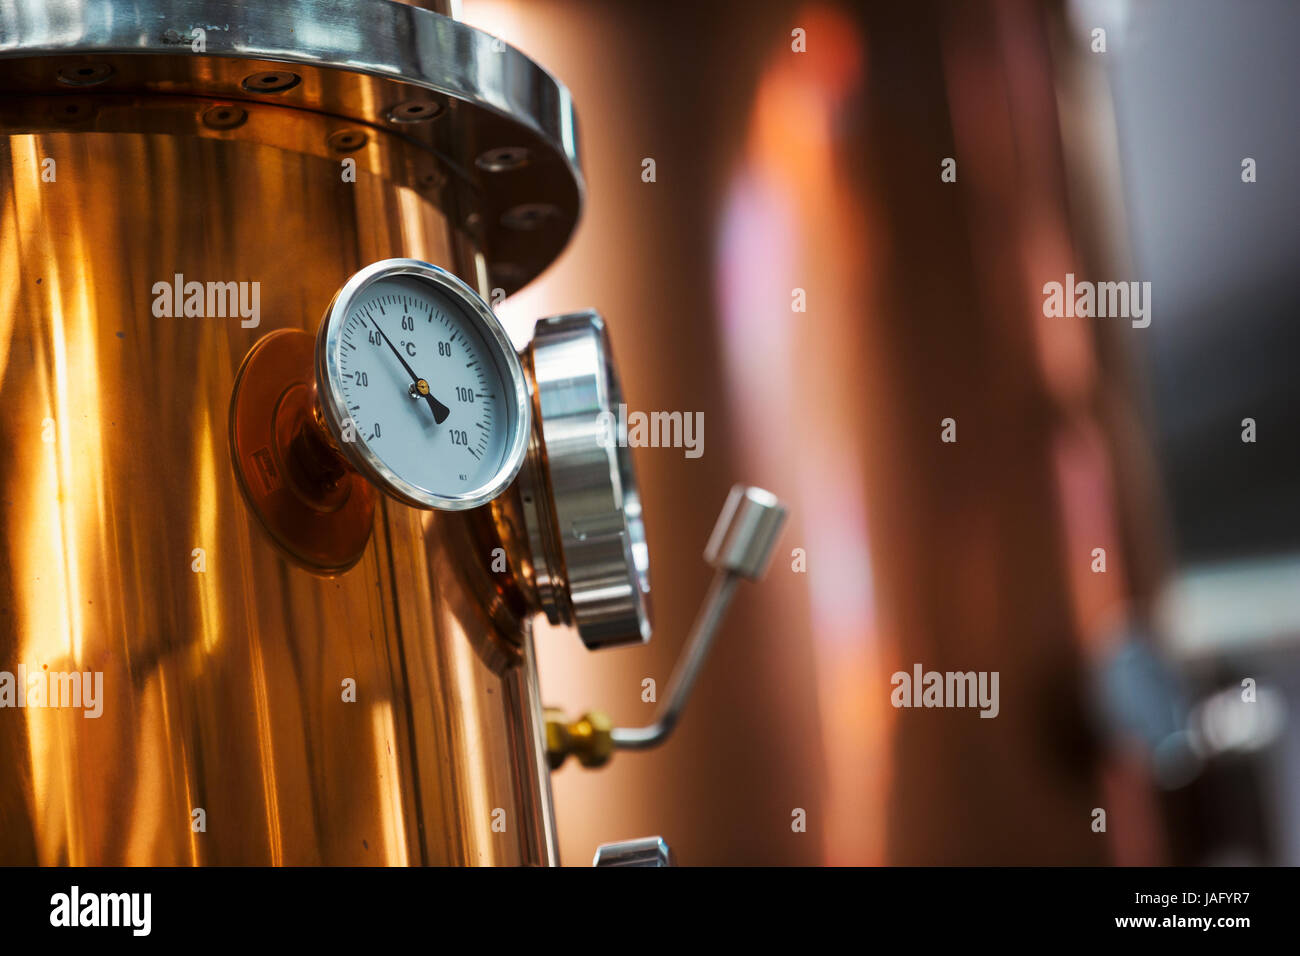 https://c8.alamy.com/comp/JAFYR7/close-up-of-a-gauge-on-a-copper-brew-kettle-or-fermentation-chamber-JAFYR7.jpg